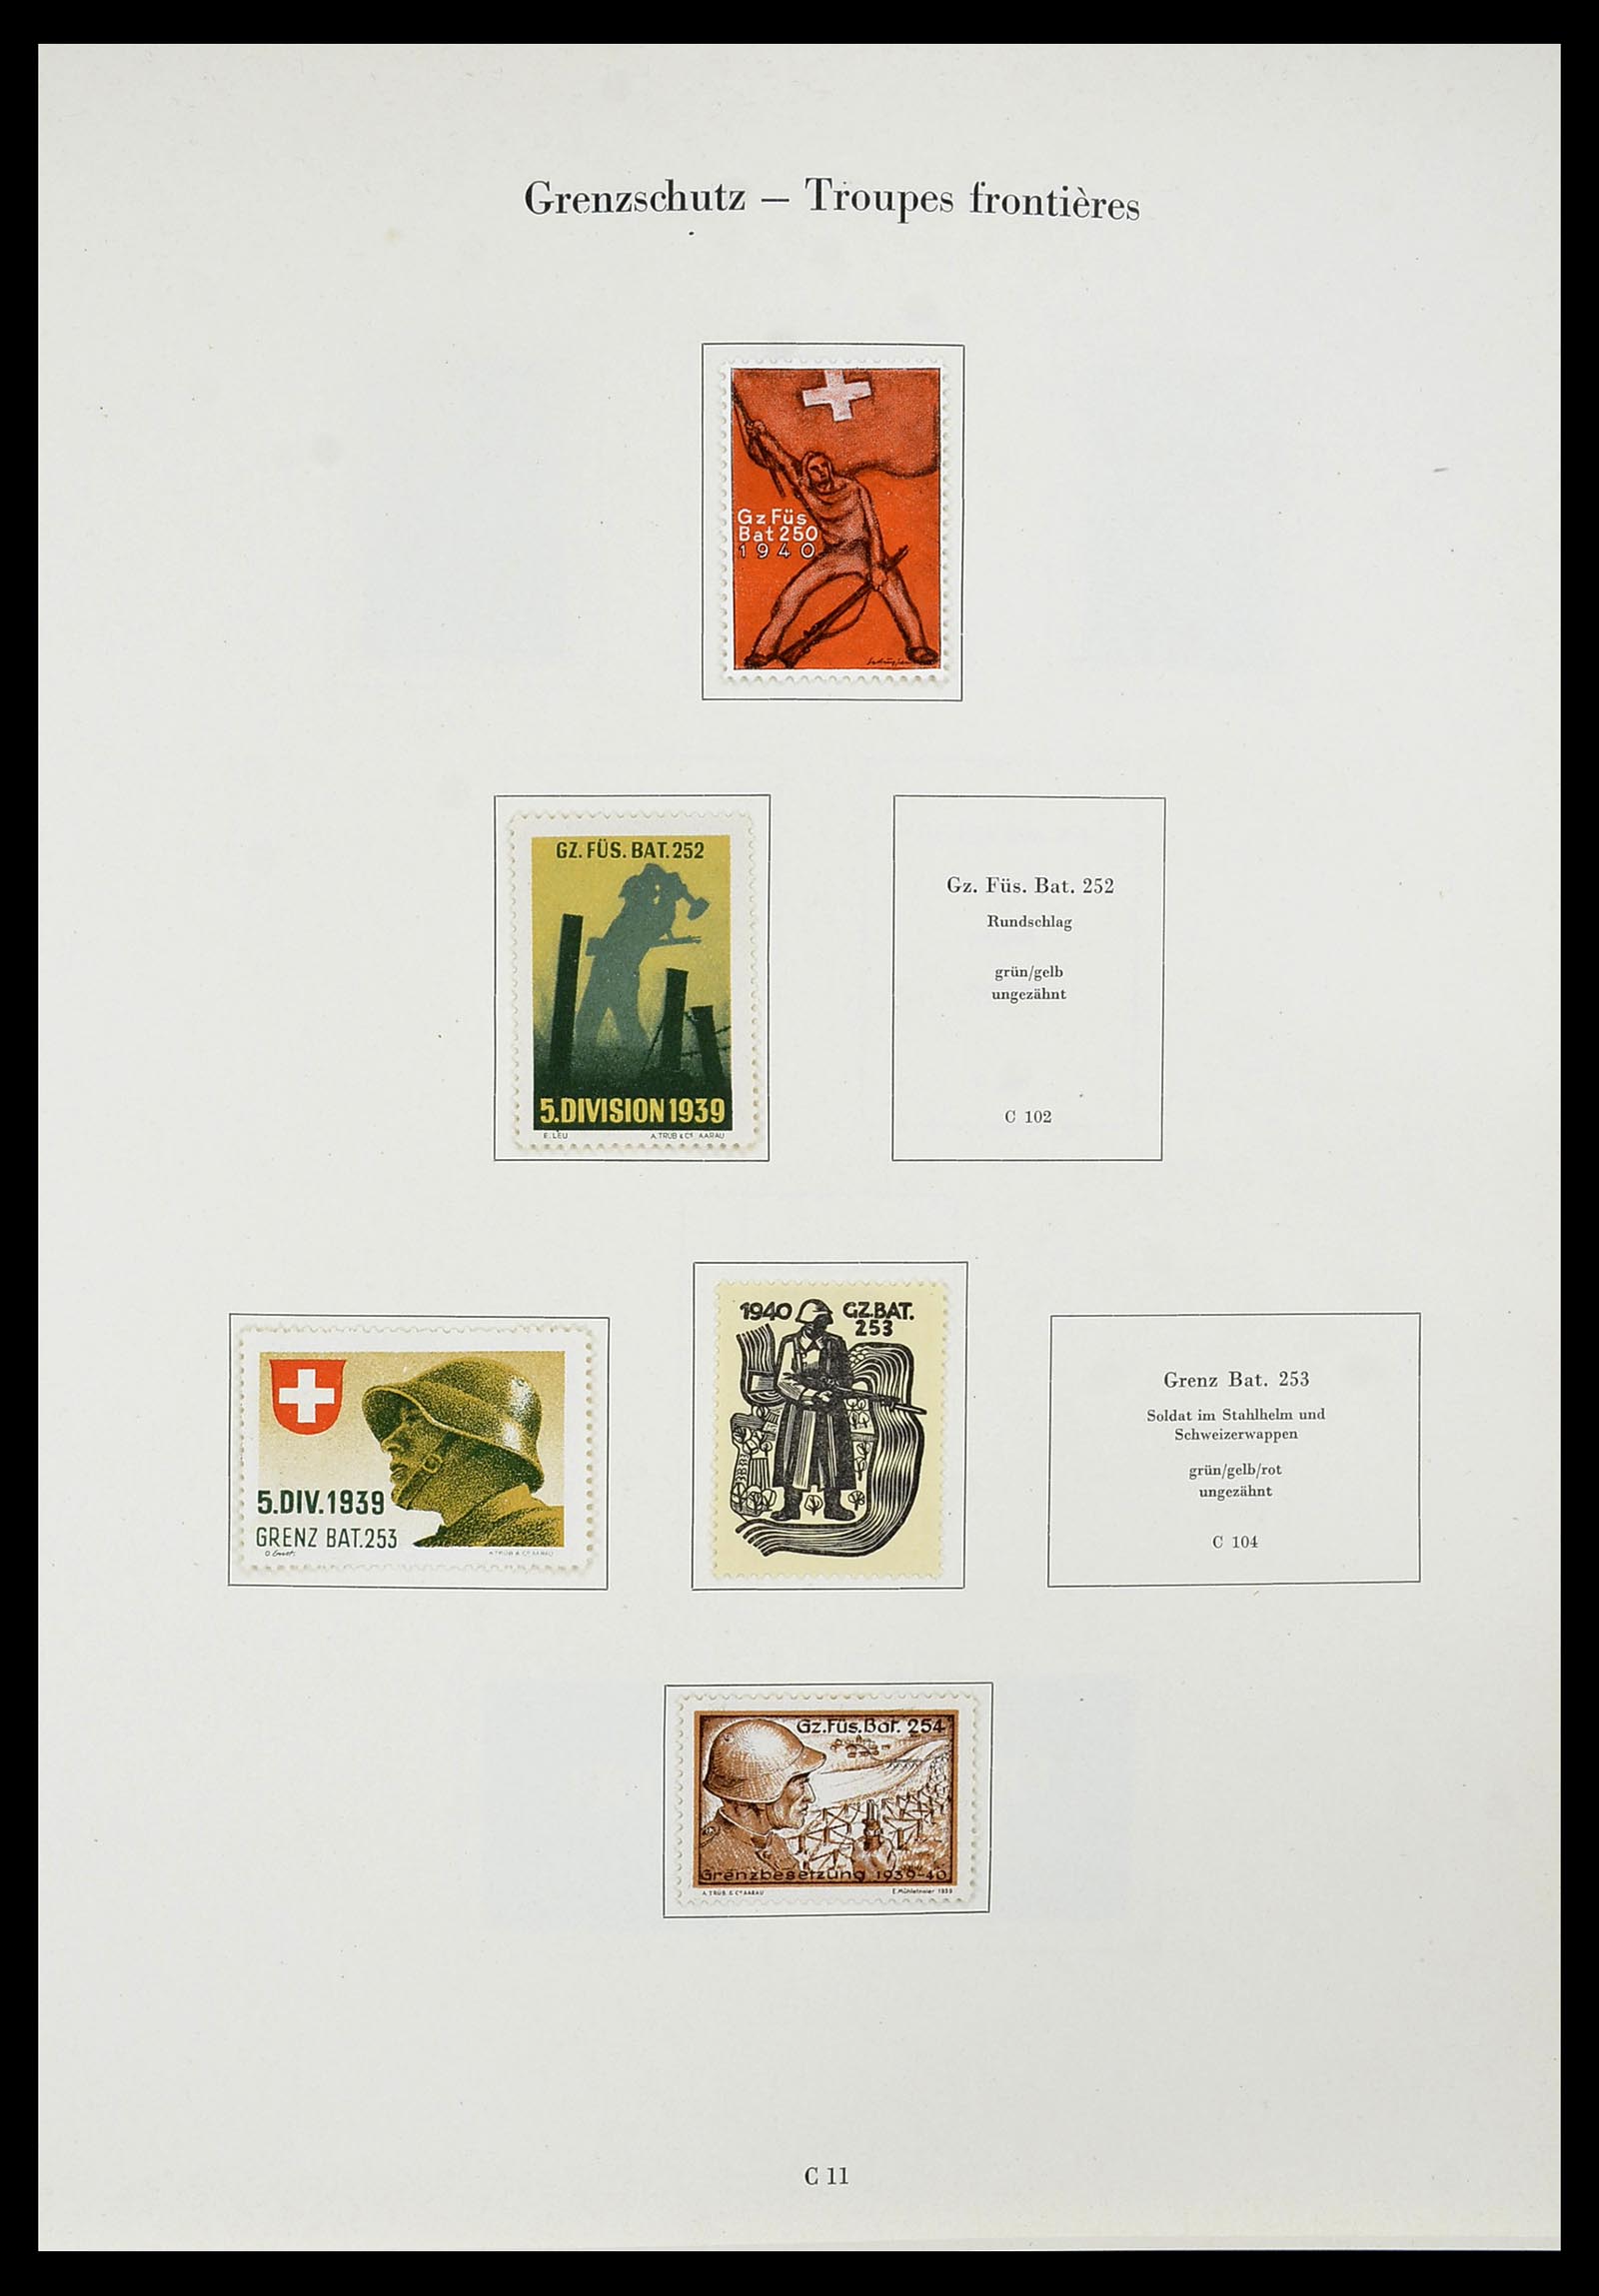 34234 096 - Stamp collection 34234 Switzerland soldier stamps 1939-1945.